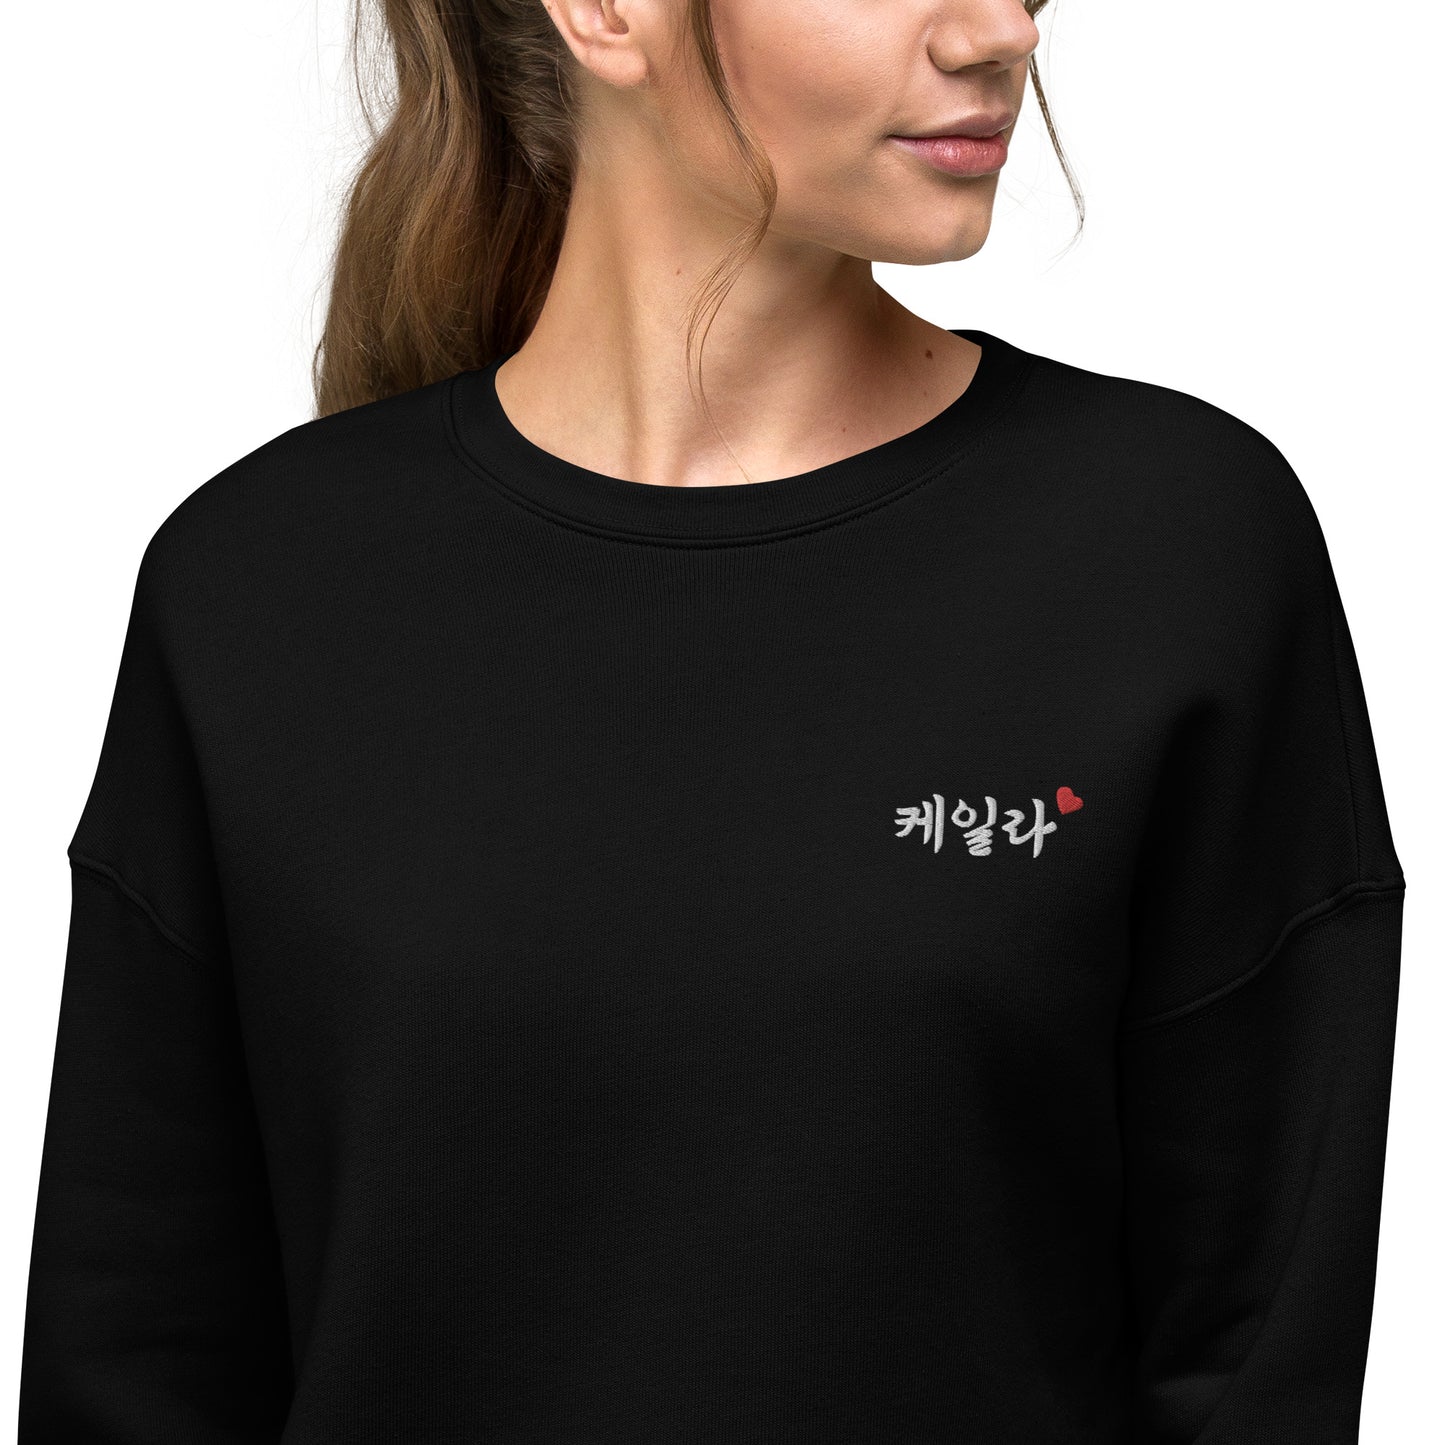 Kayla Korean Name Embroidery Women's Cropped Sweatshirt